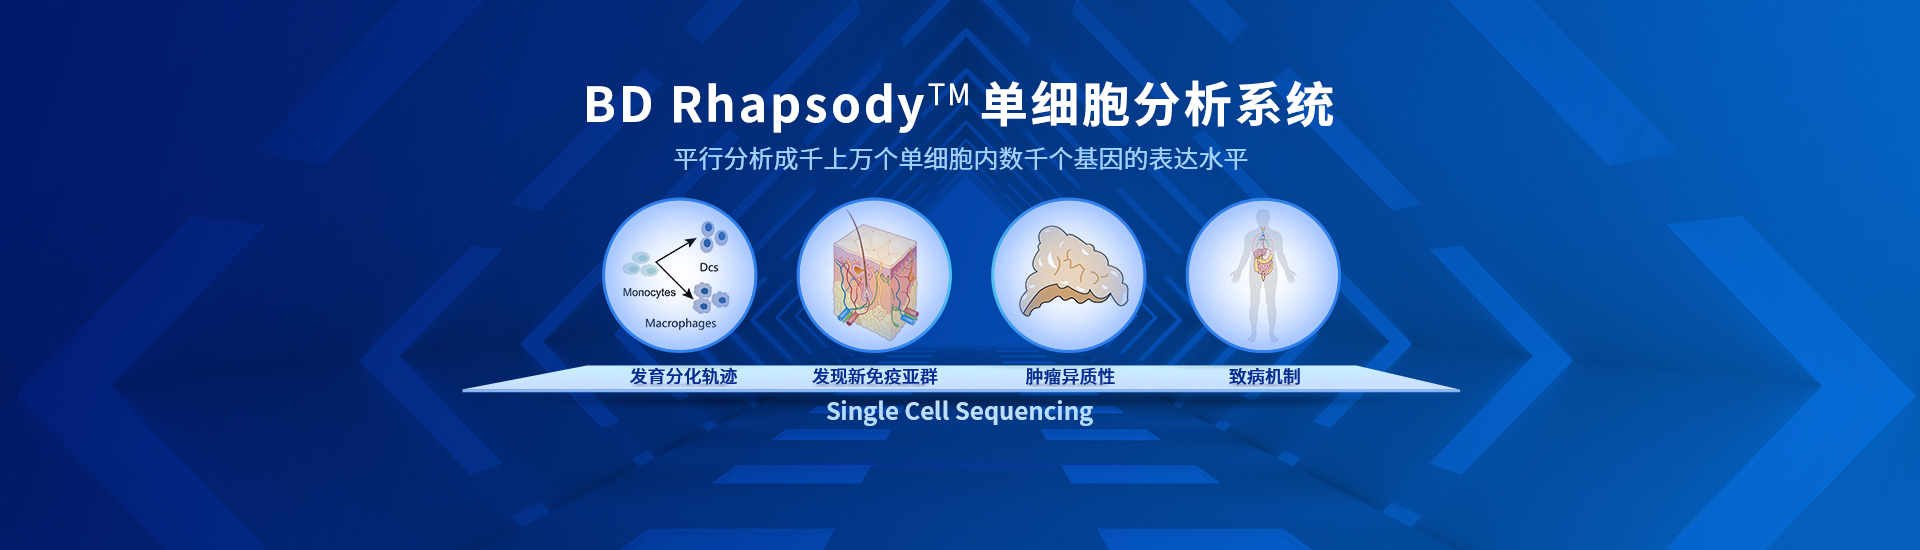 BD Rhapsody单细胞测序核心技术